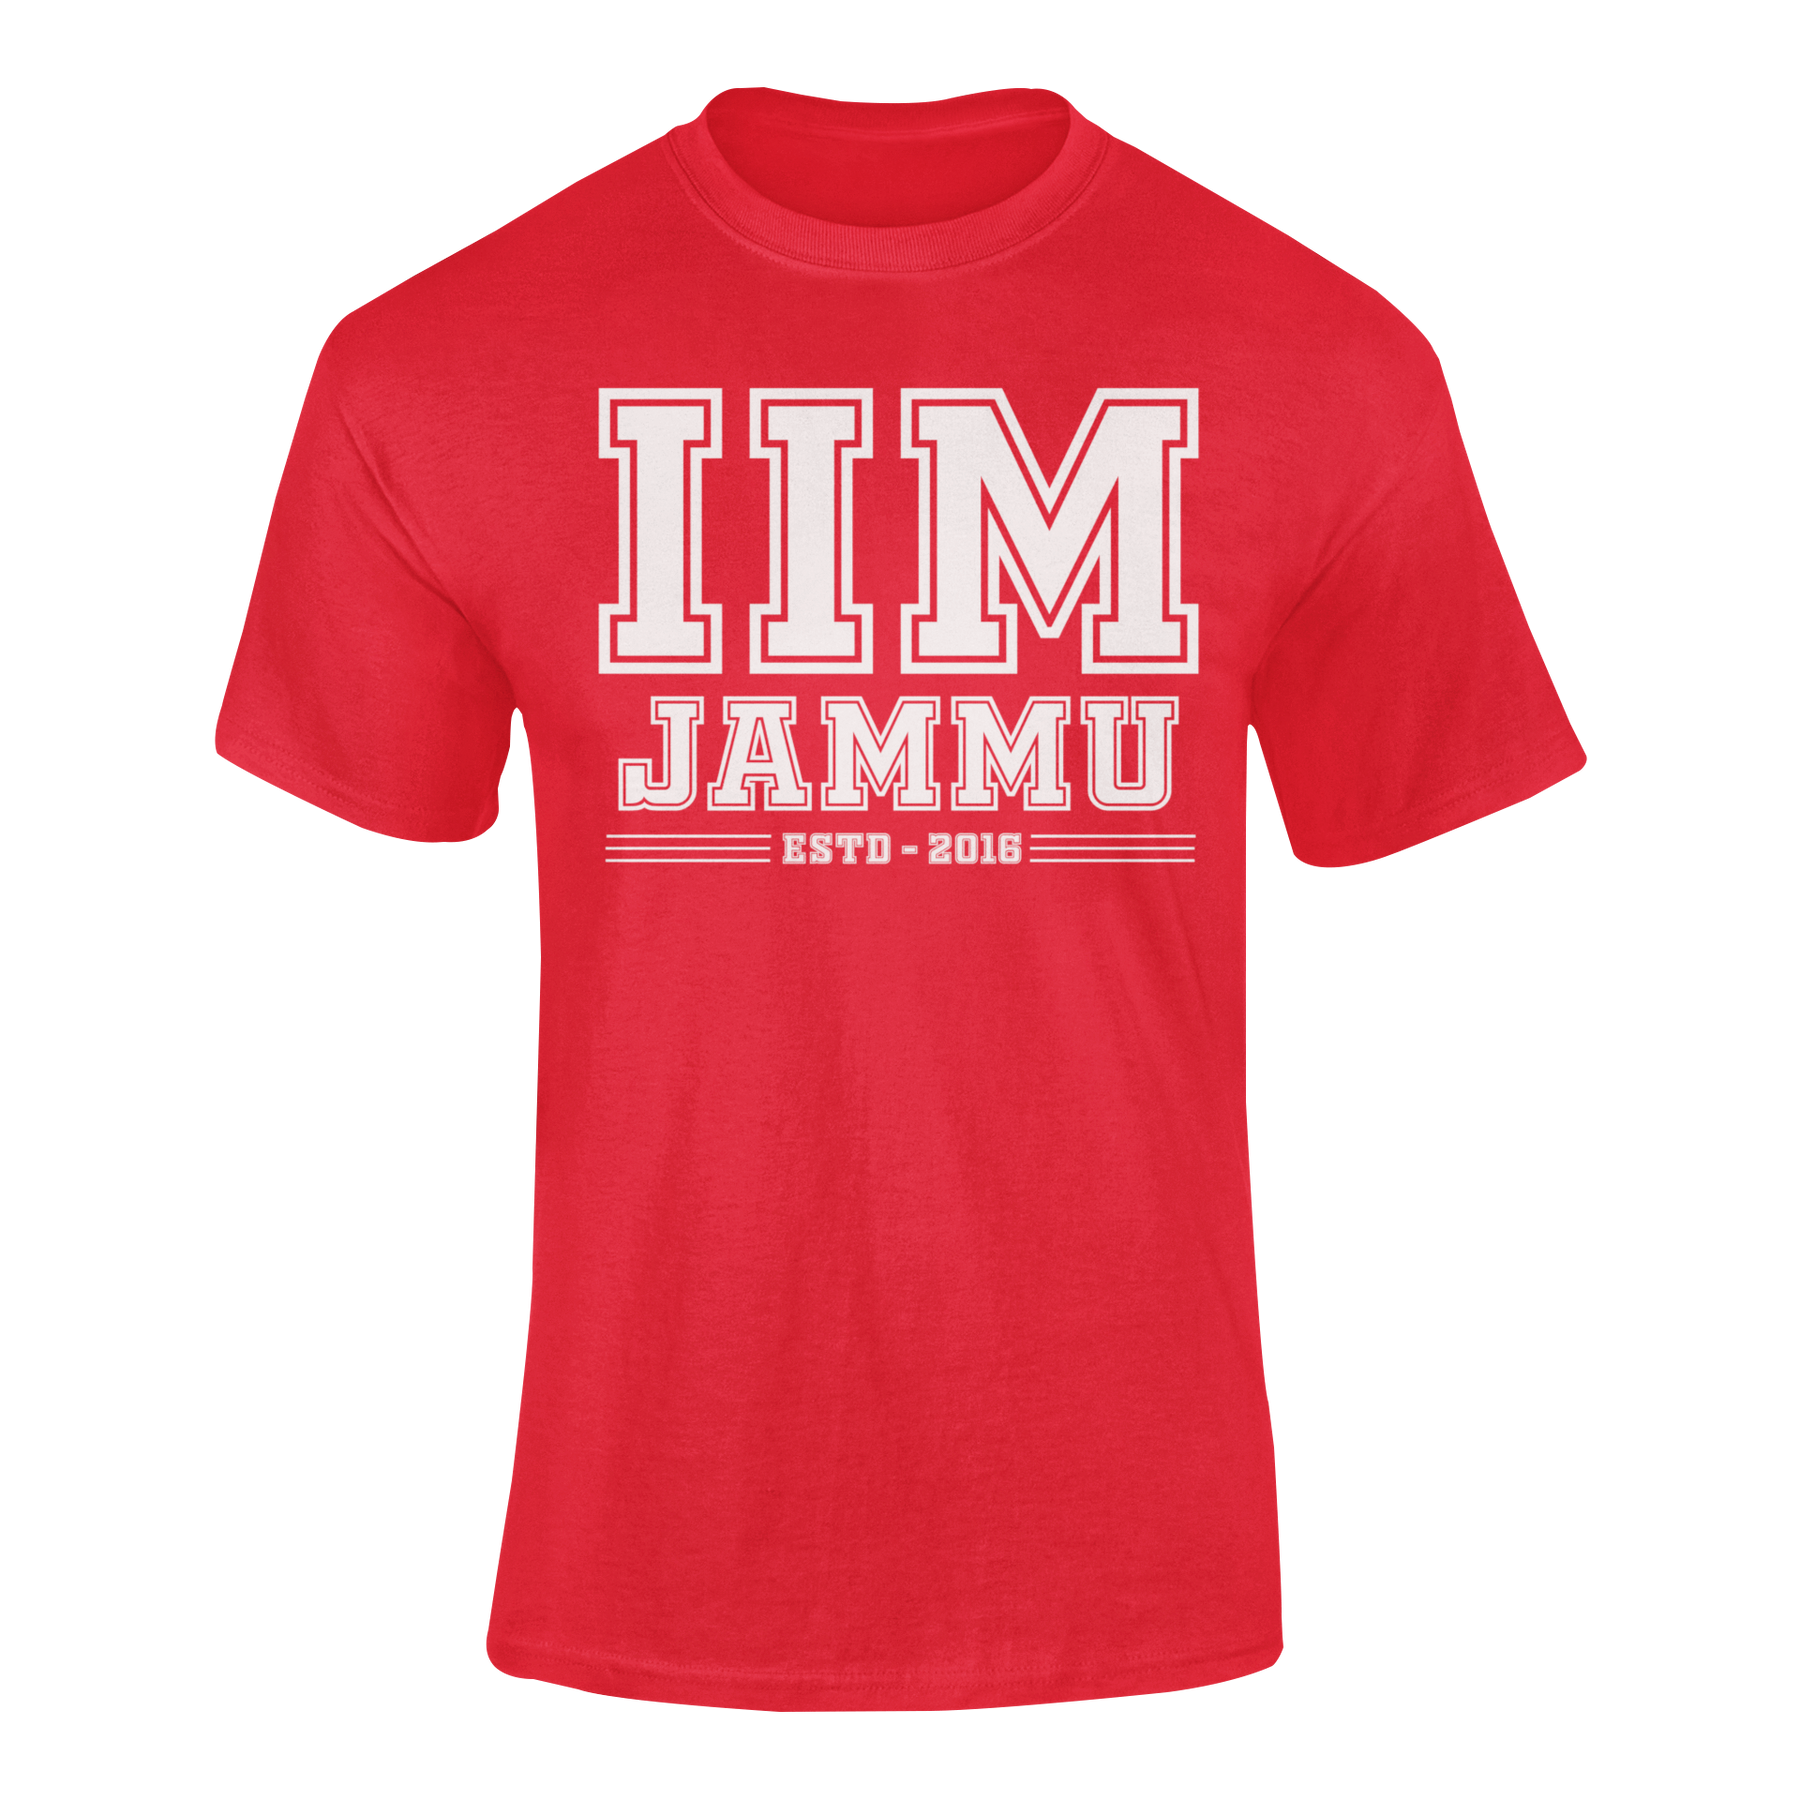 IIM JAMMU - teeshood.com